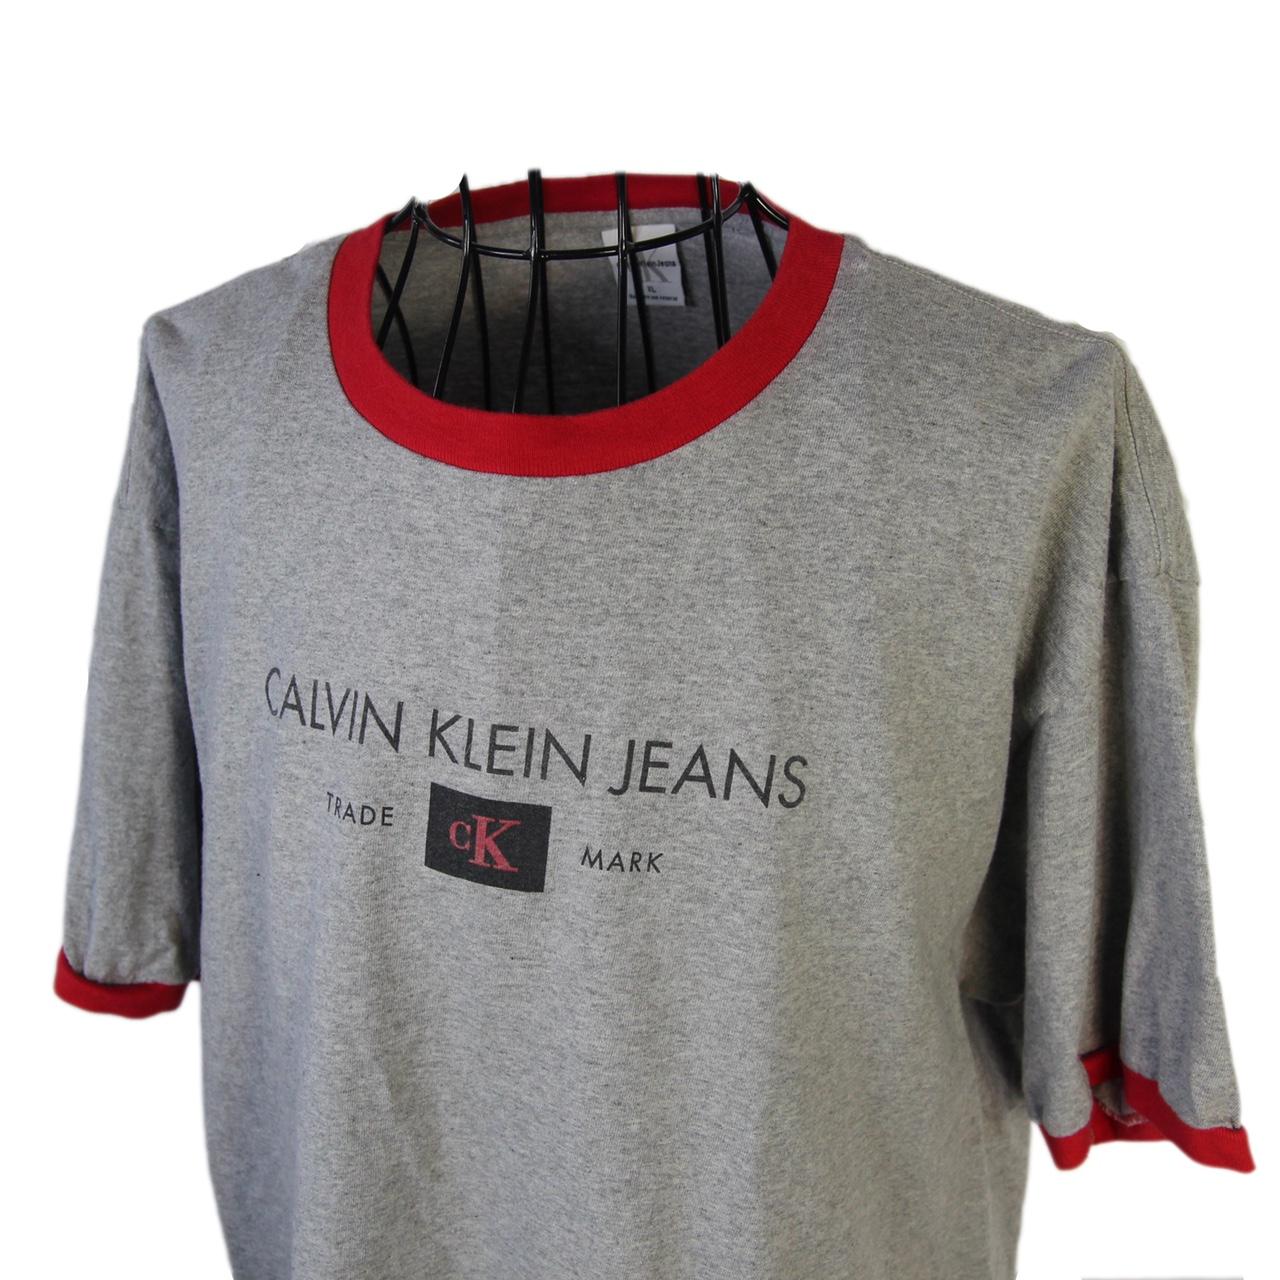 Vintage Calvin T Klein Depop Ringer - Shirt. Features